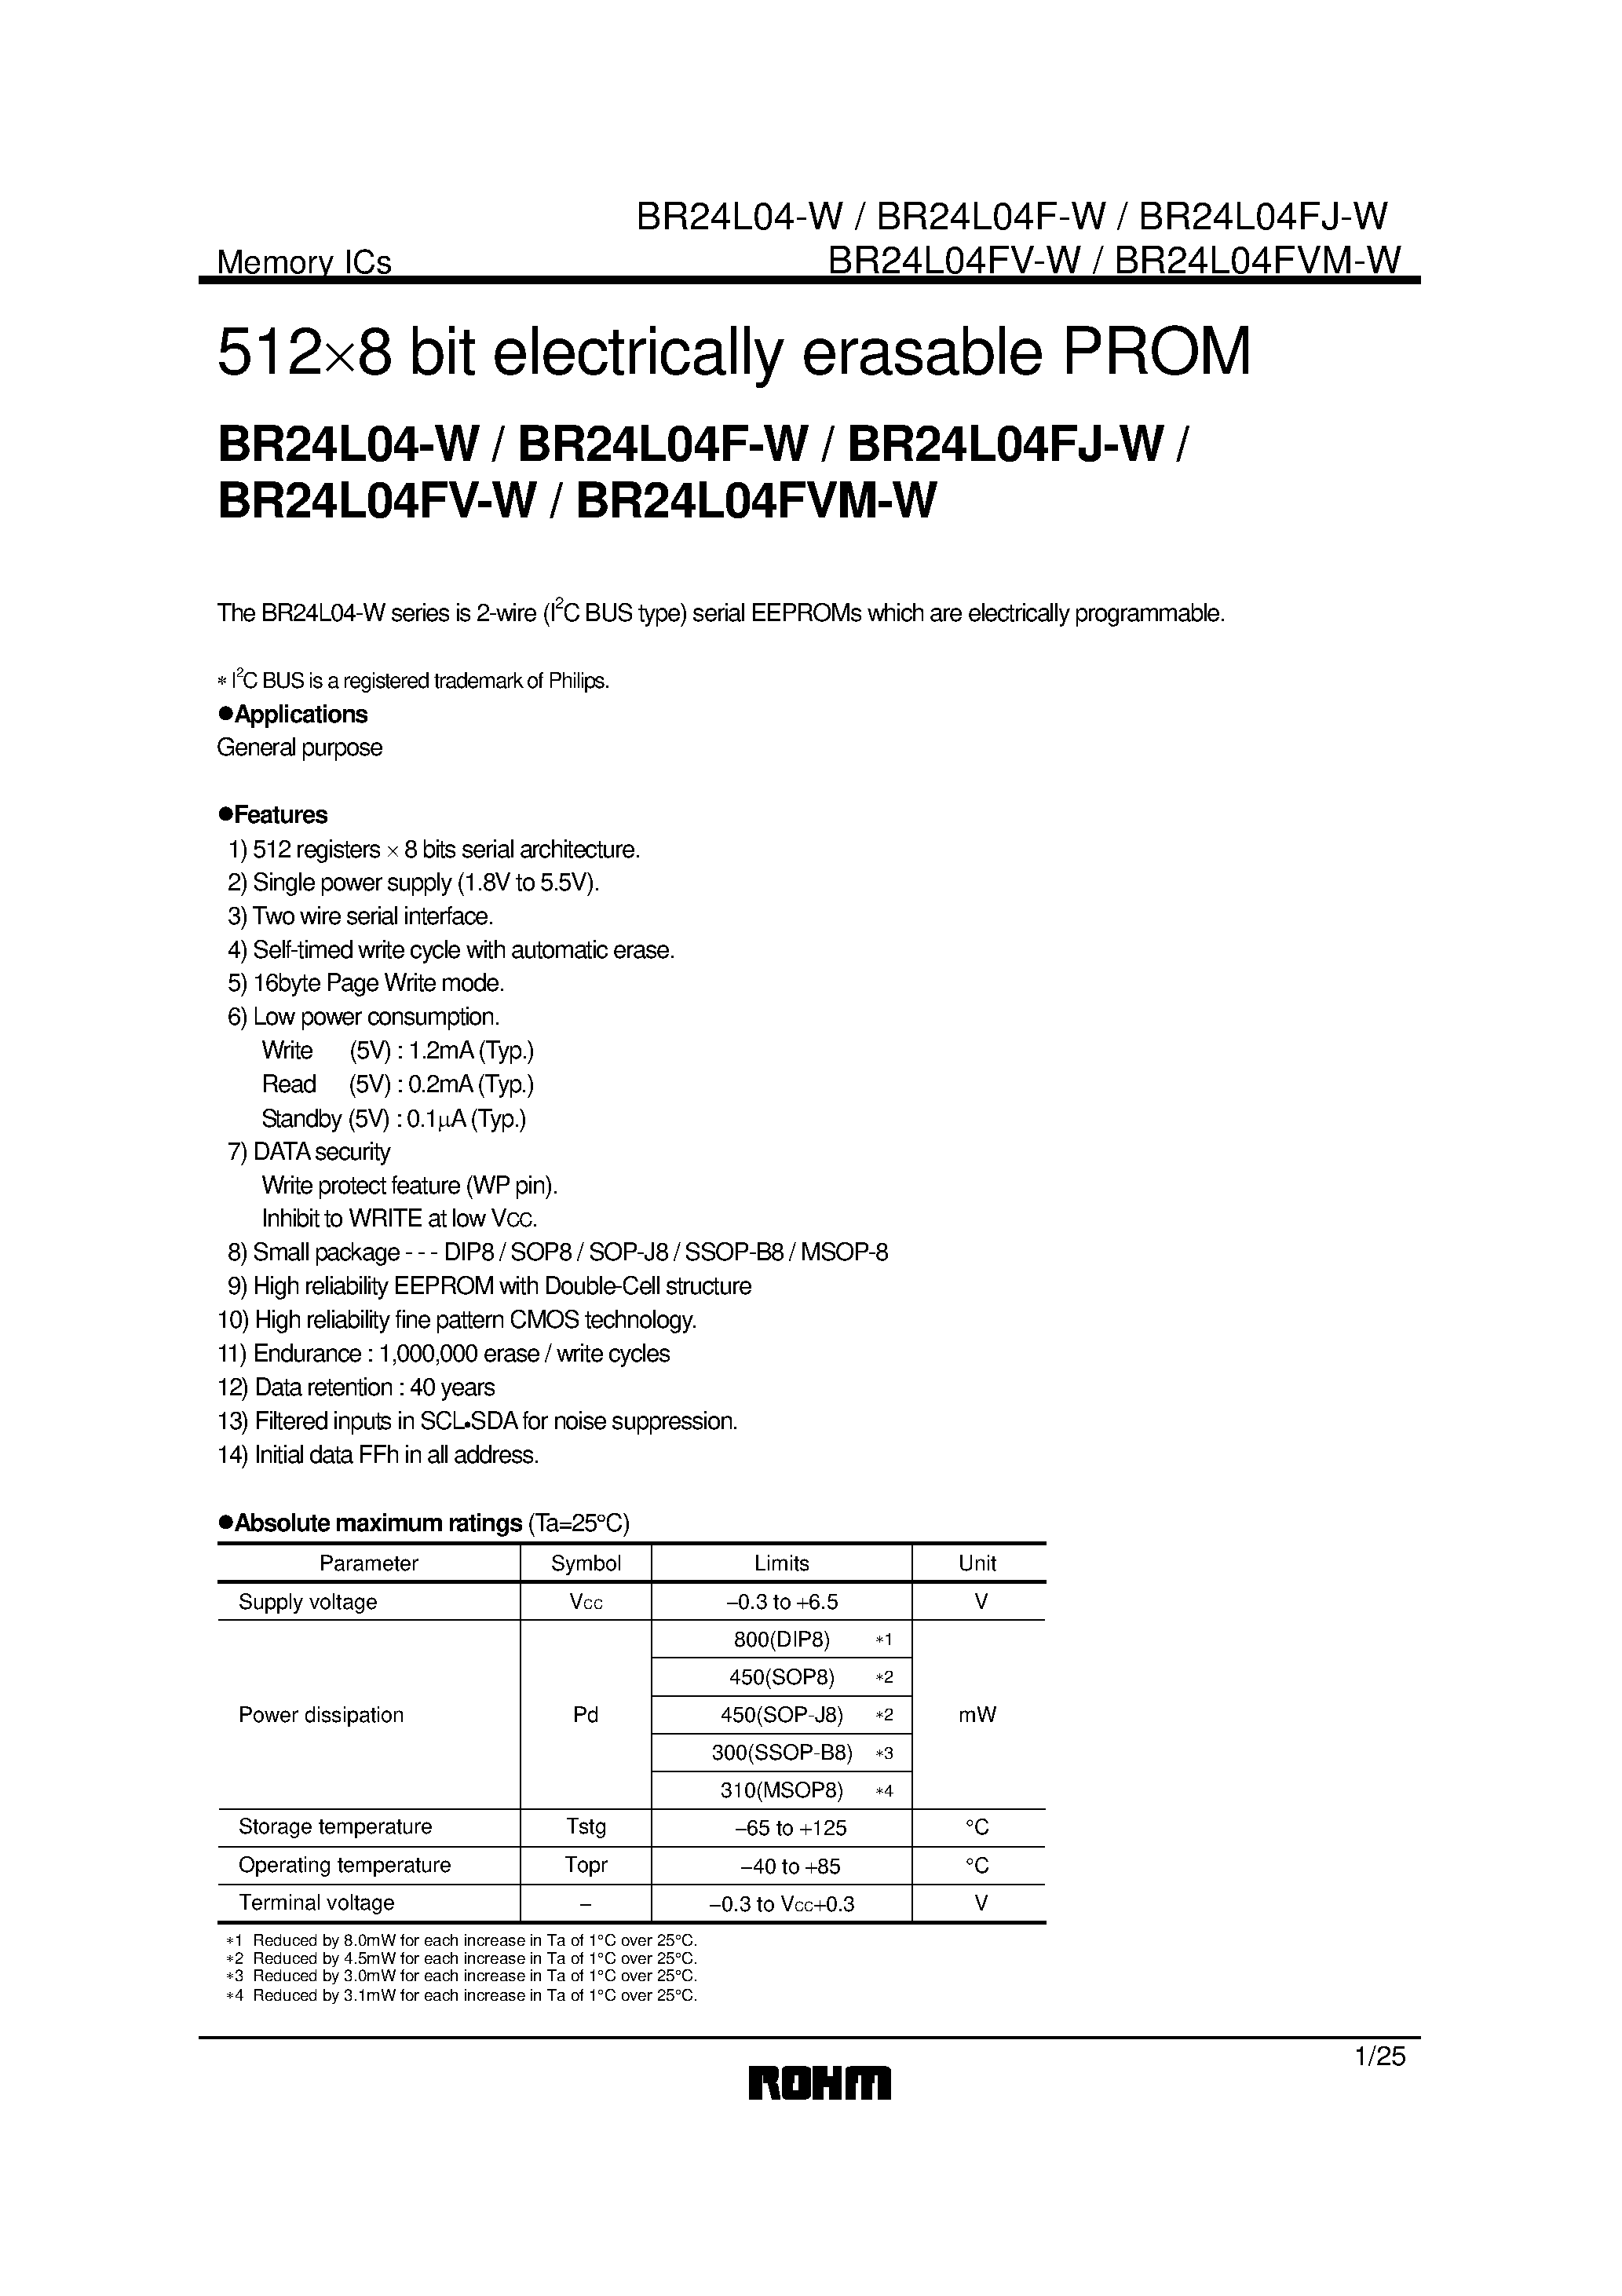 Даташит BR24L04FJ-W - 5128 bit electrically erasable PROM страница 1